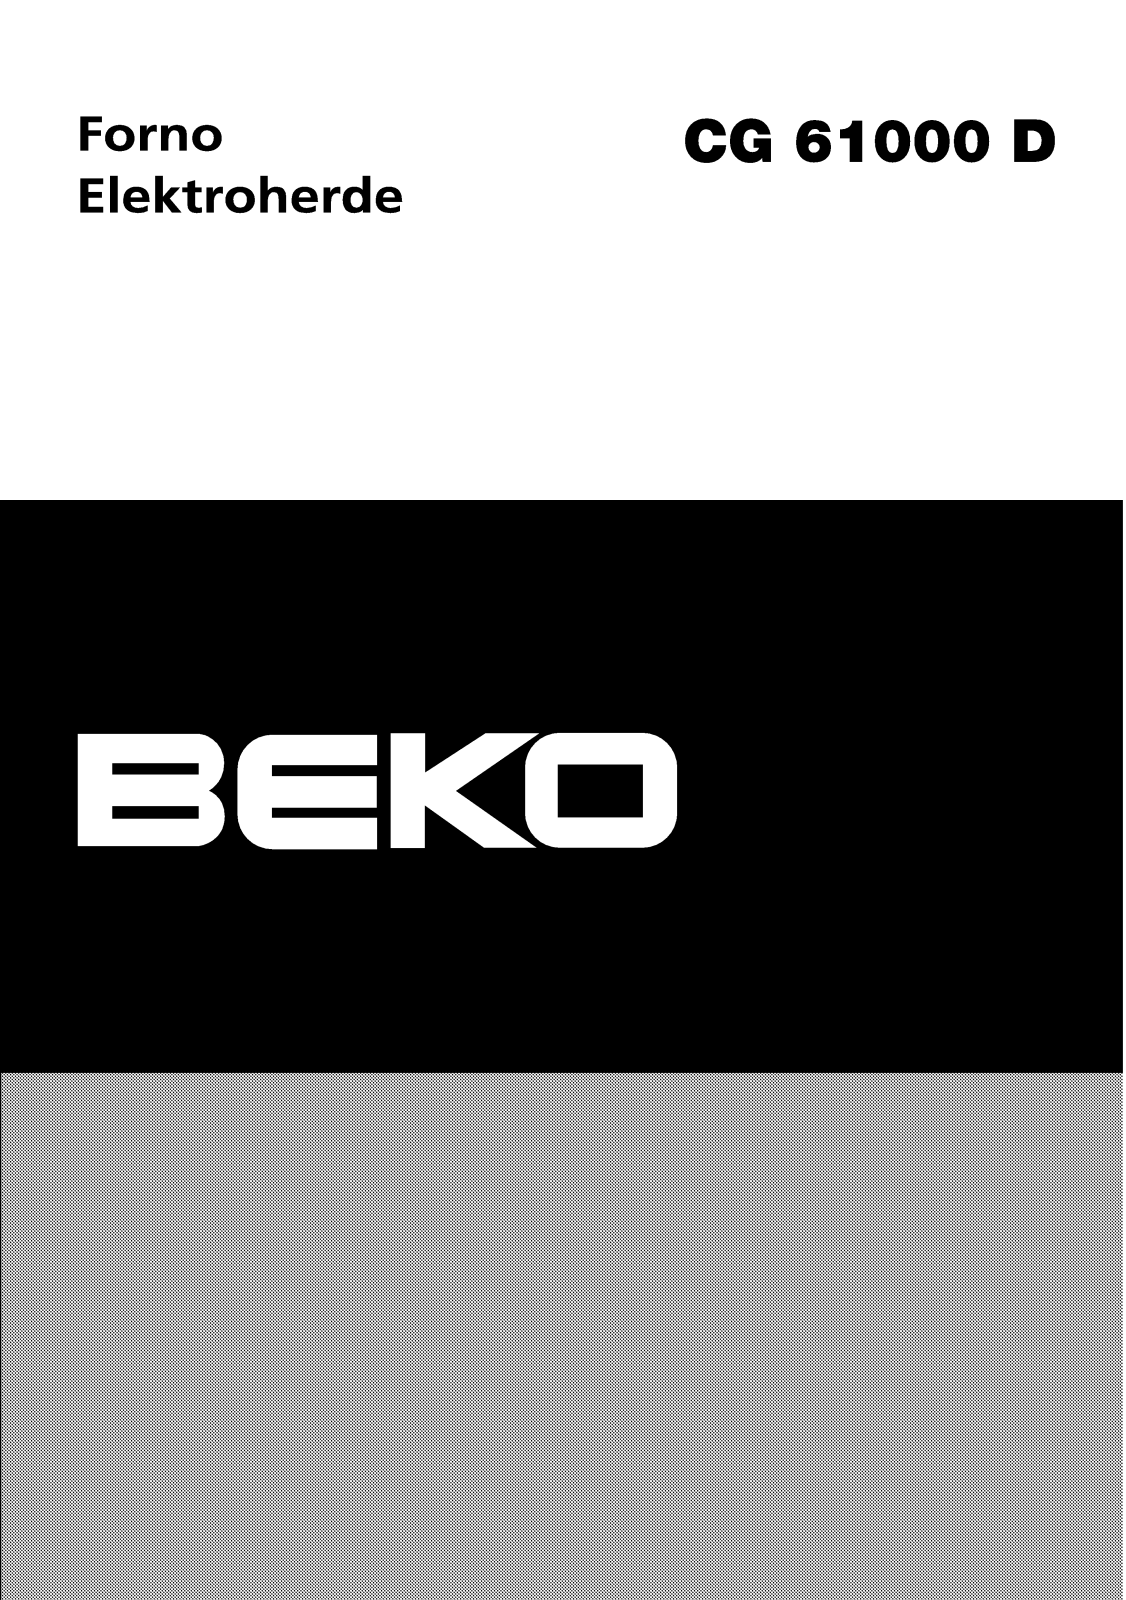 Beko CG 61000 D Manual